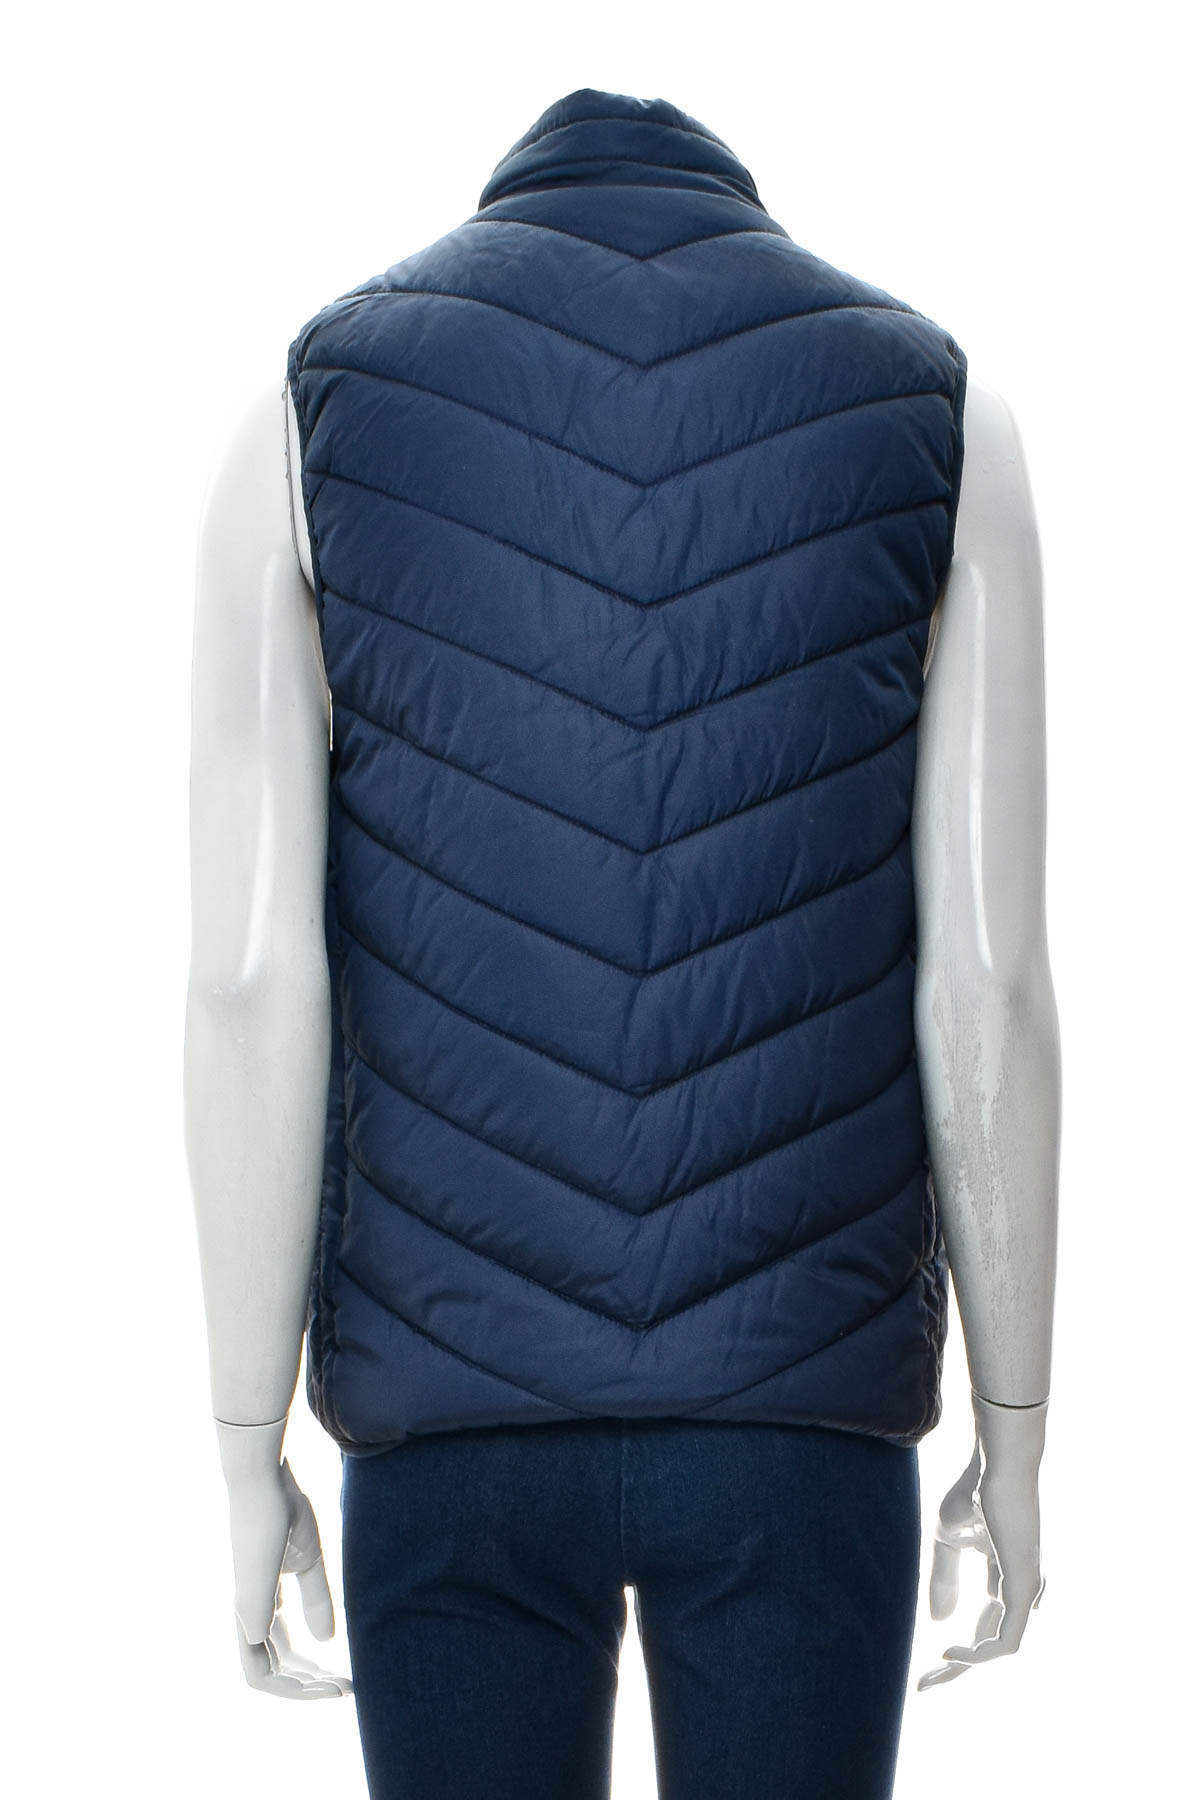 Women's vest with heater - 1